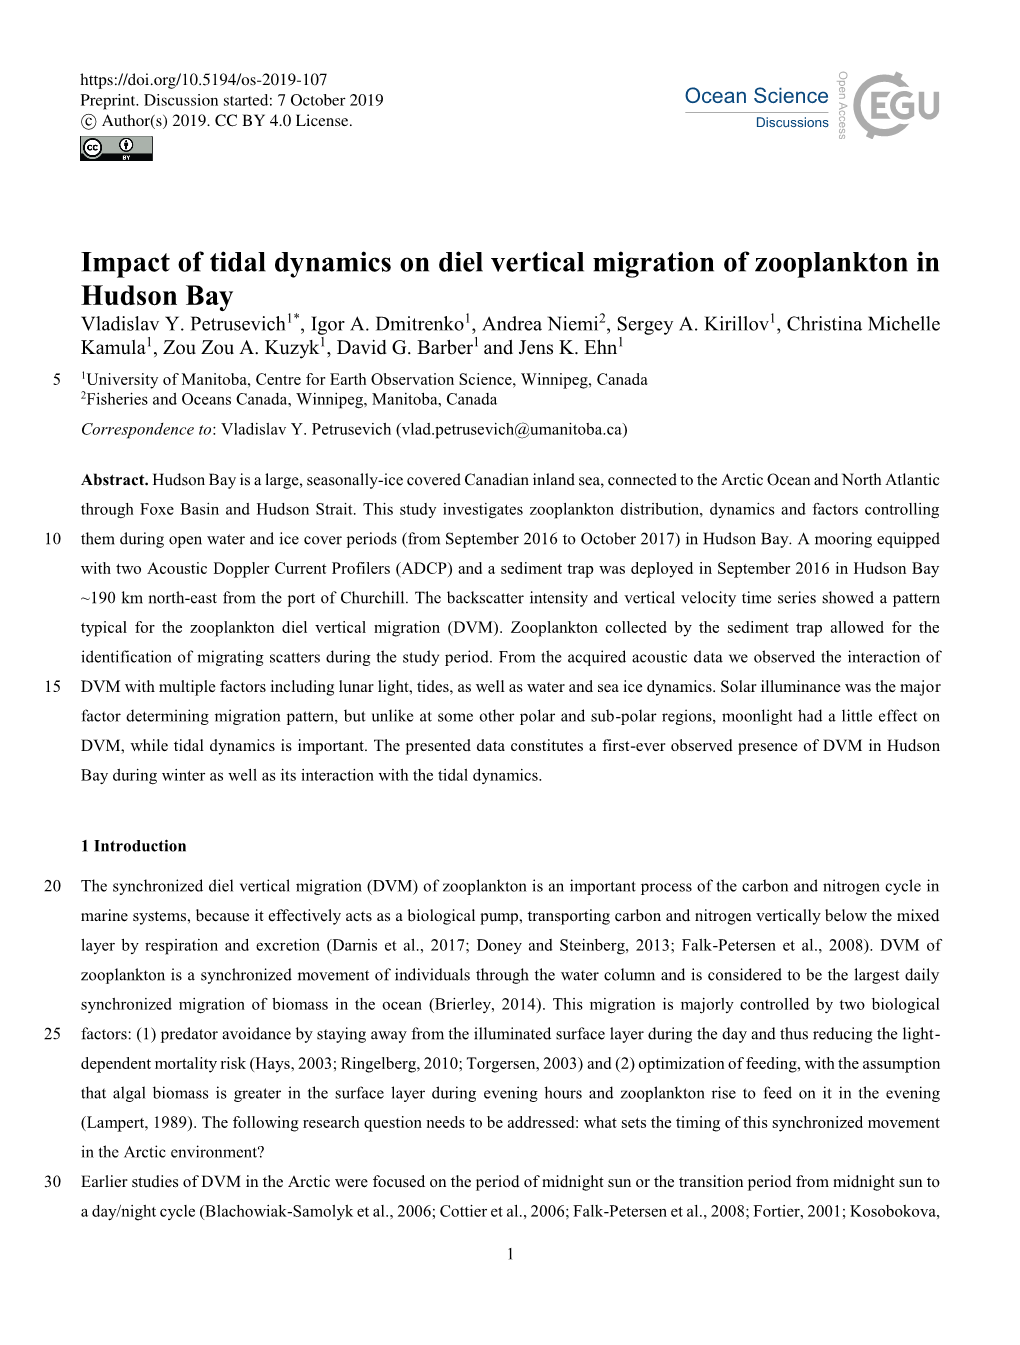 Impact of Tidal Dynamics on Diel Vertical Migration of Zooplankton in Hudson Bay Vladislav Y